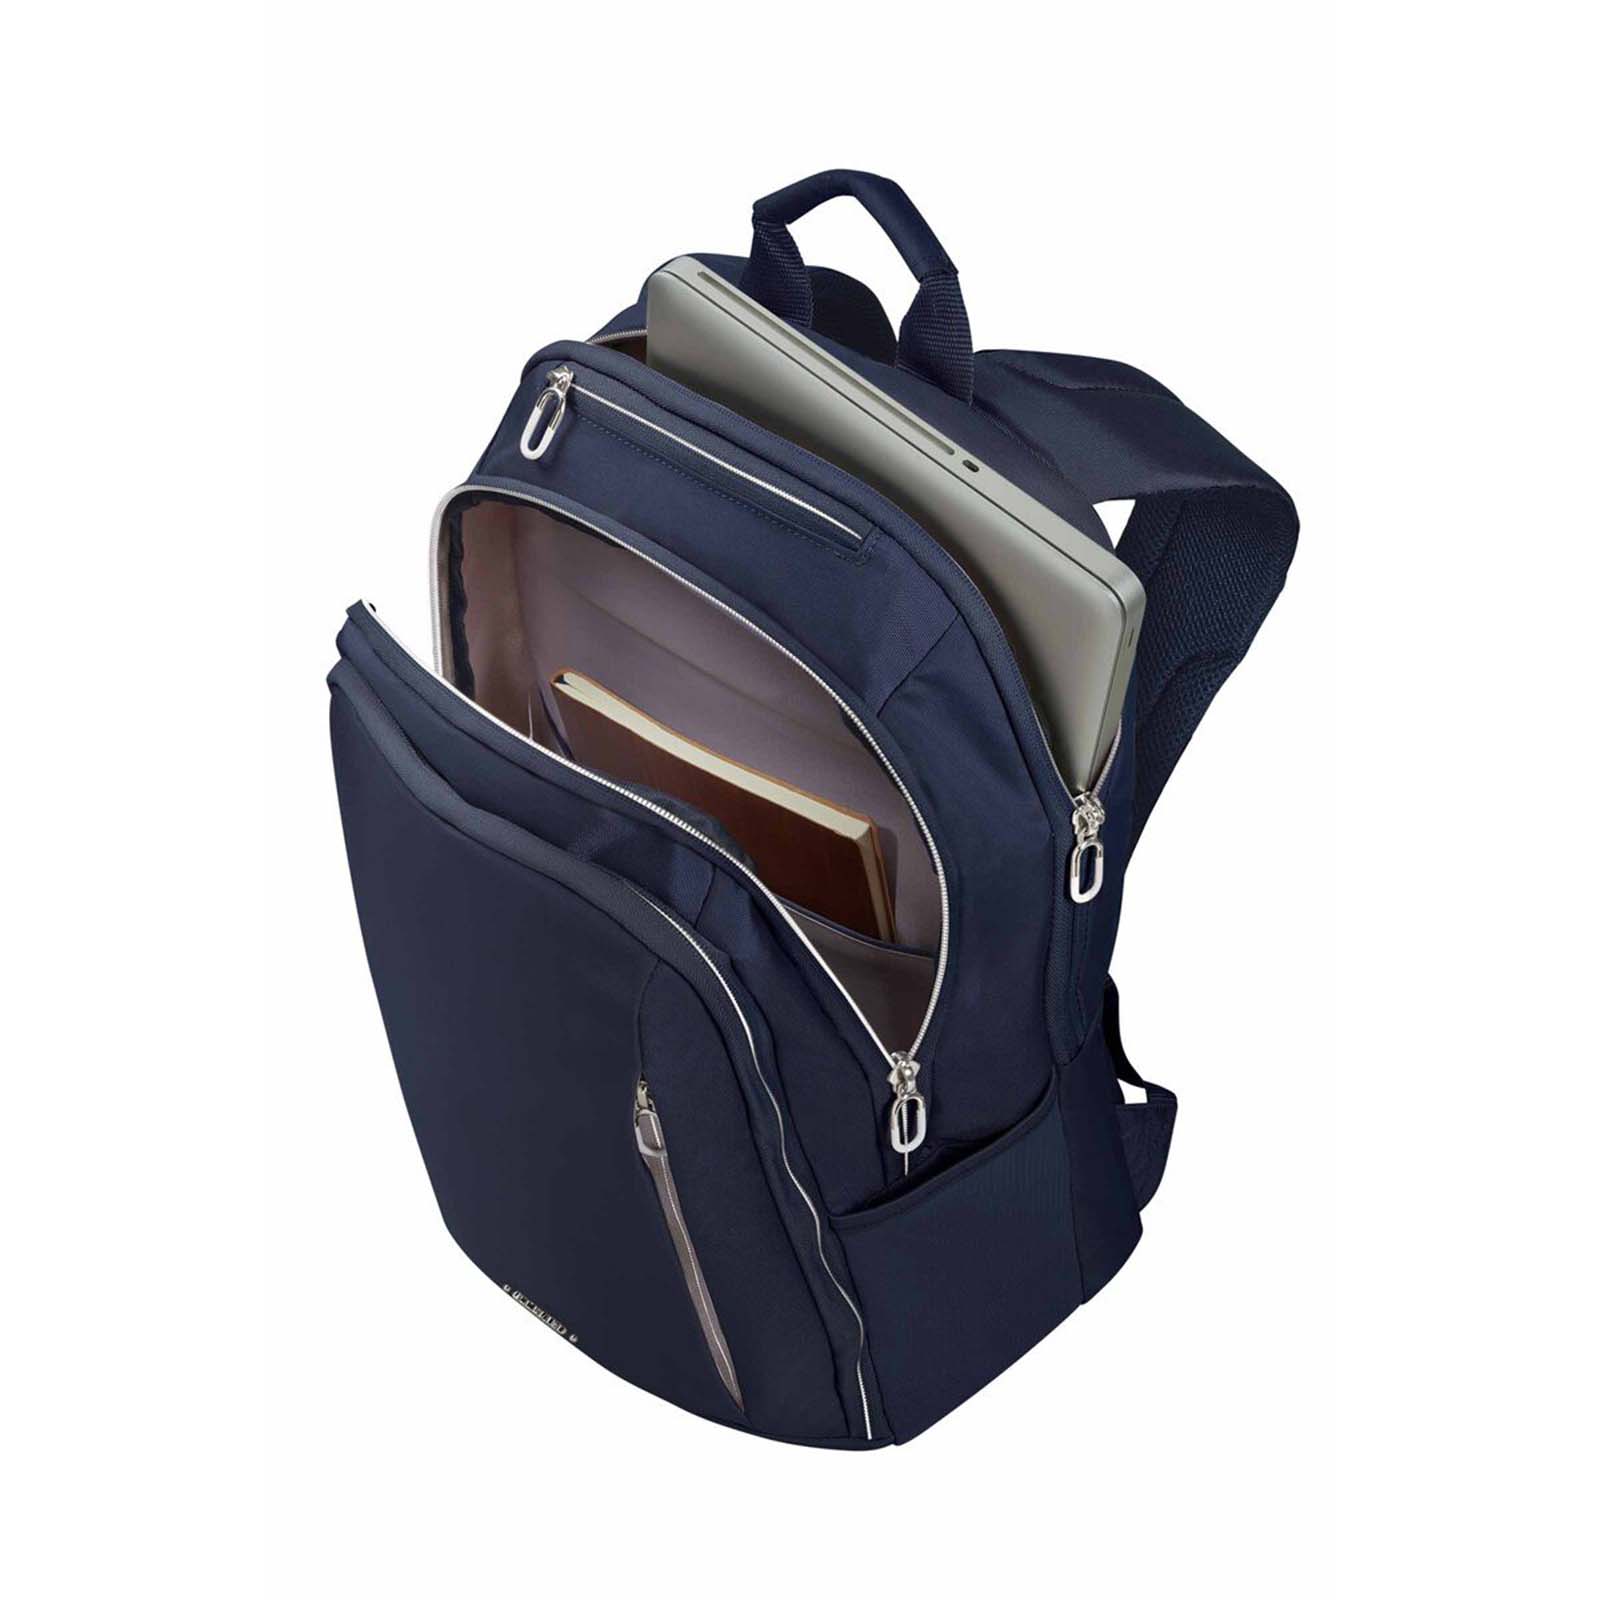 Samsonite-Guardit-Classy-15-Inch-Laptop-Backpack-Midnight-Blue-Laptop-Pocket